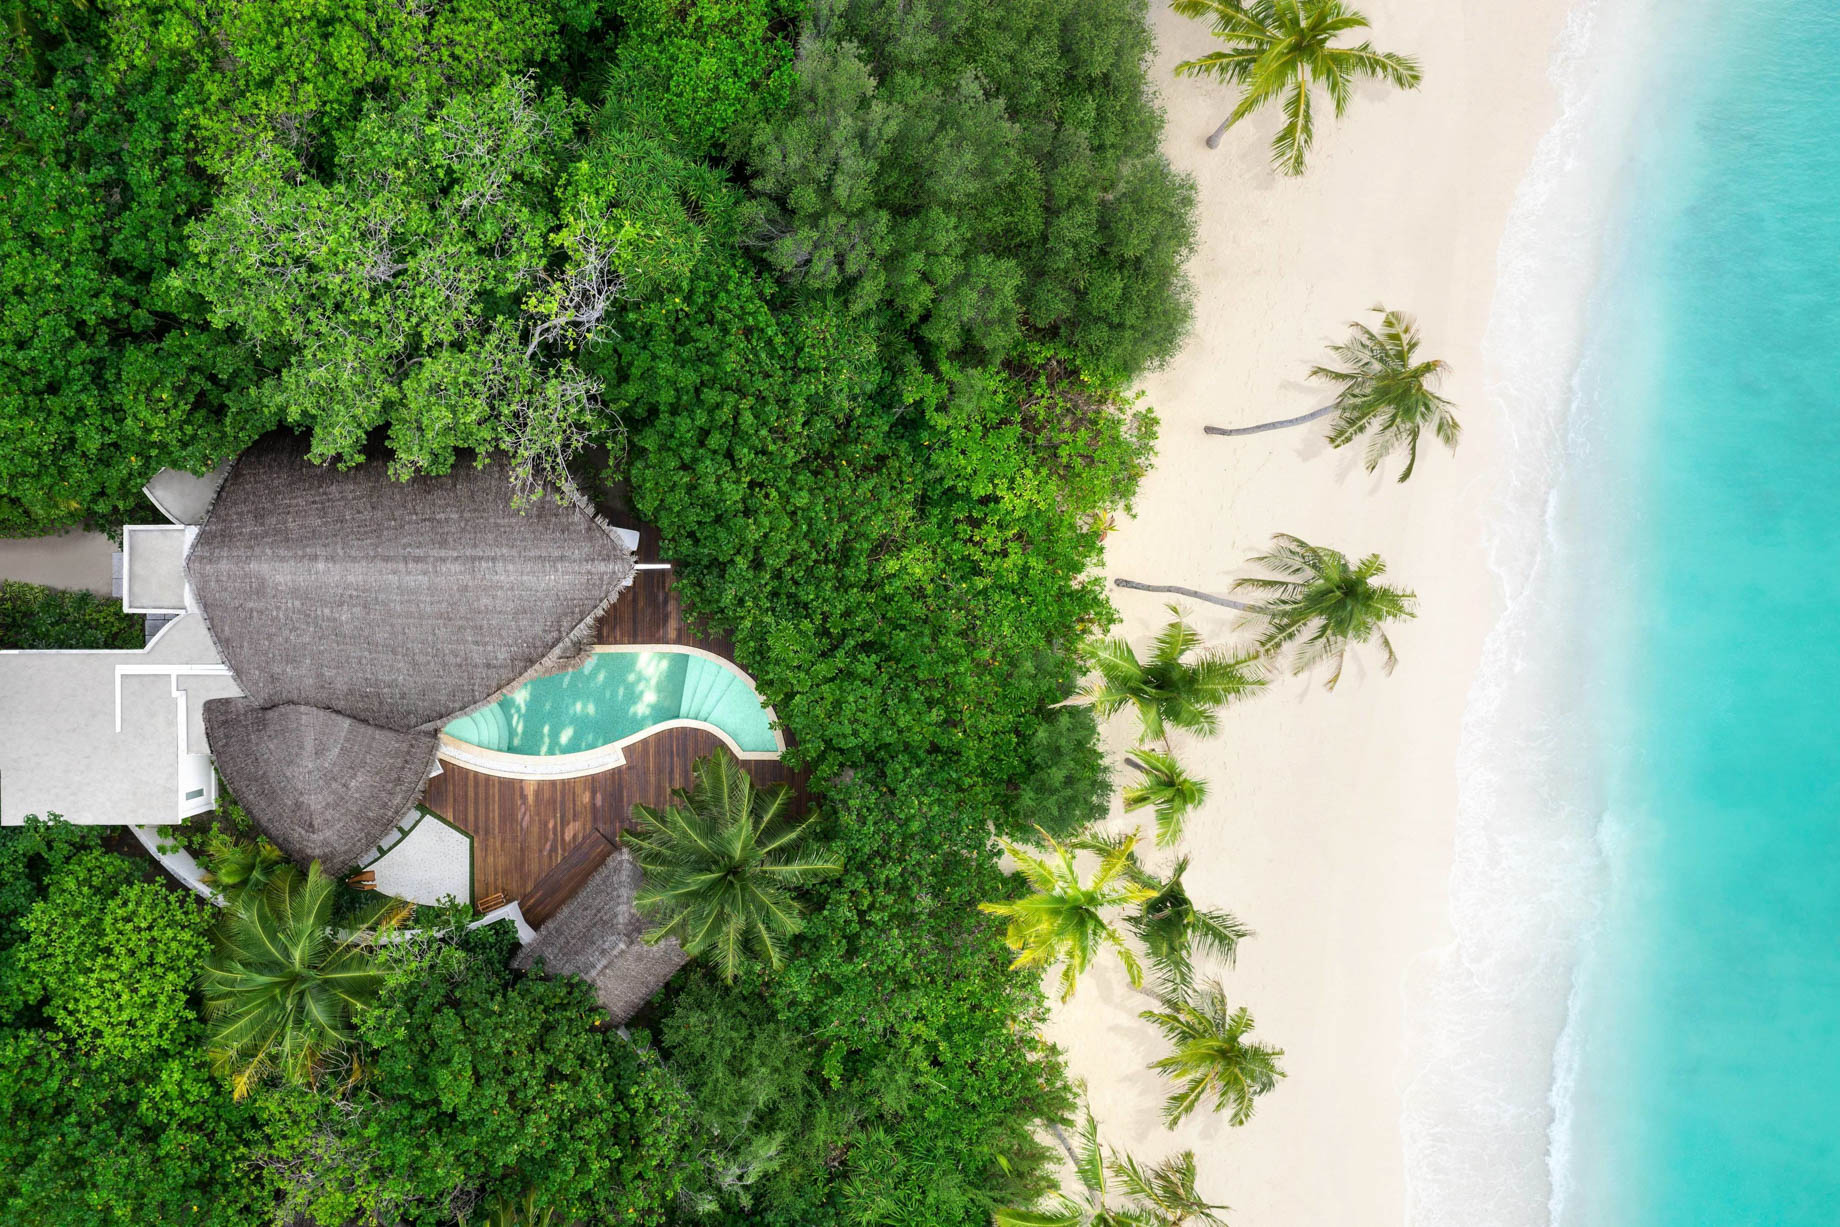 JW Marriott Maldives Resort & Spa – Shaviyani Atoll, Maldives – Duplex Beach Pool Villa Bird’s Eye View